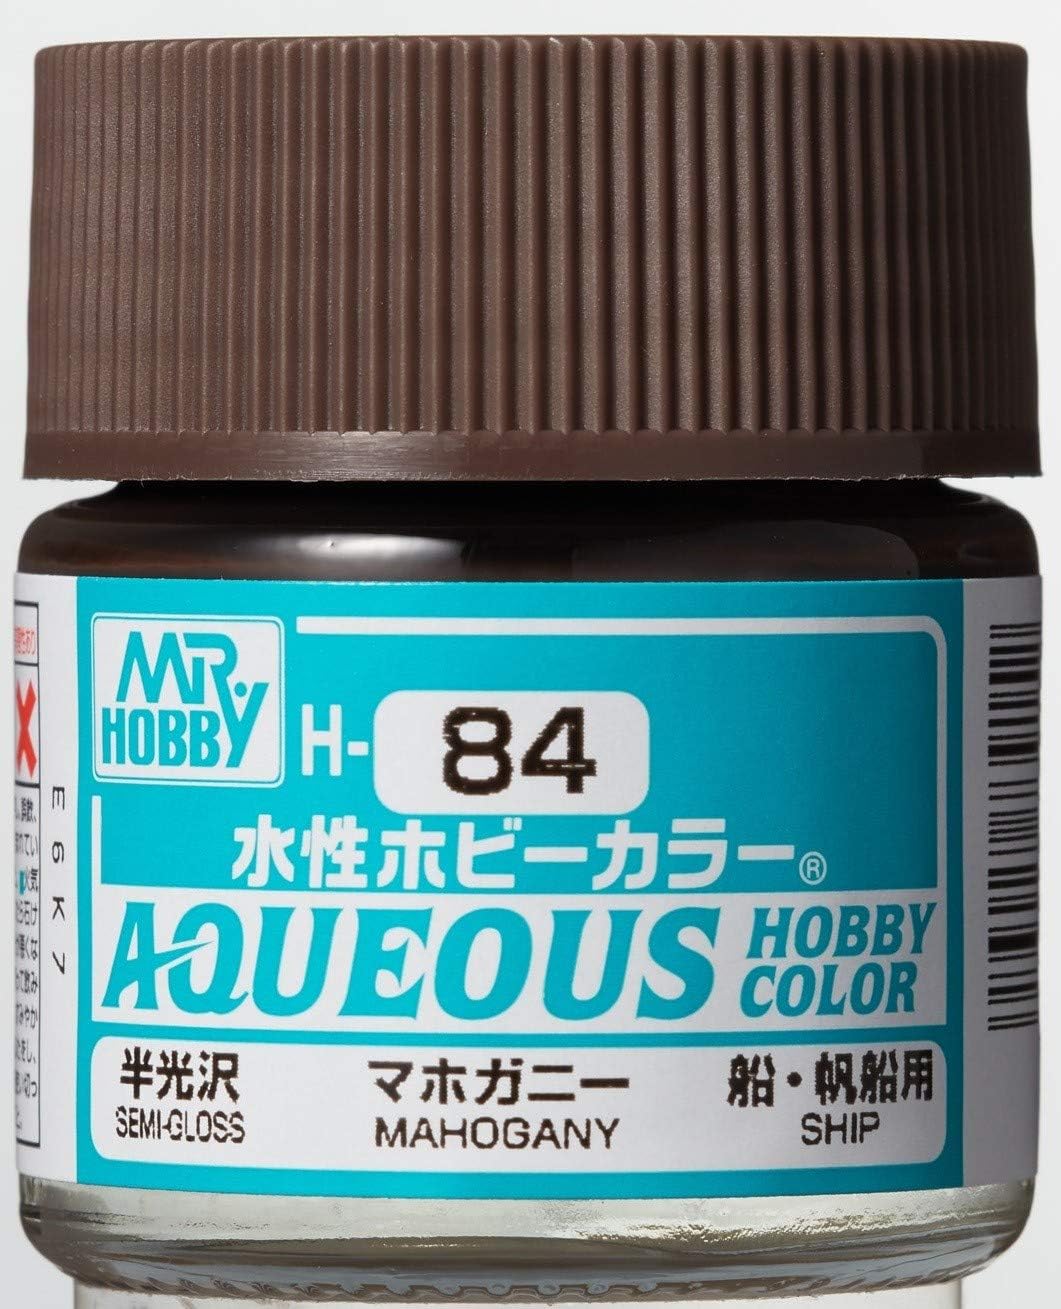 Mr. Hobby Aqueous Hobby Color H84 Semi-Gloss Mahogany 10ml Bottle